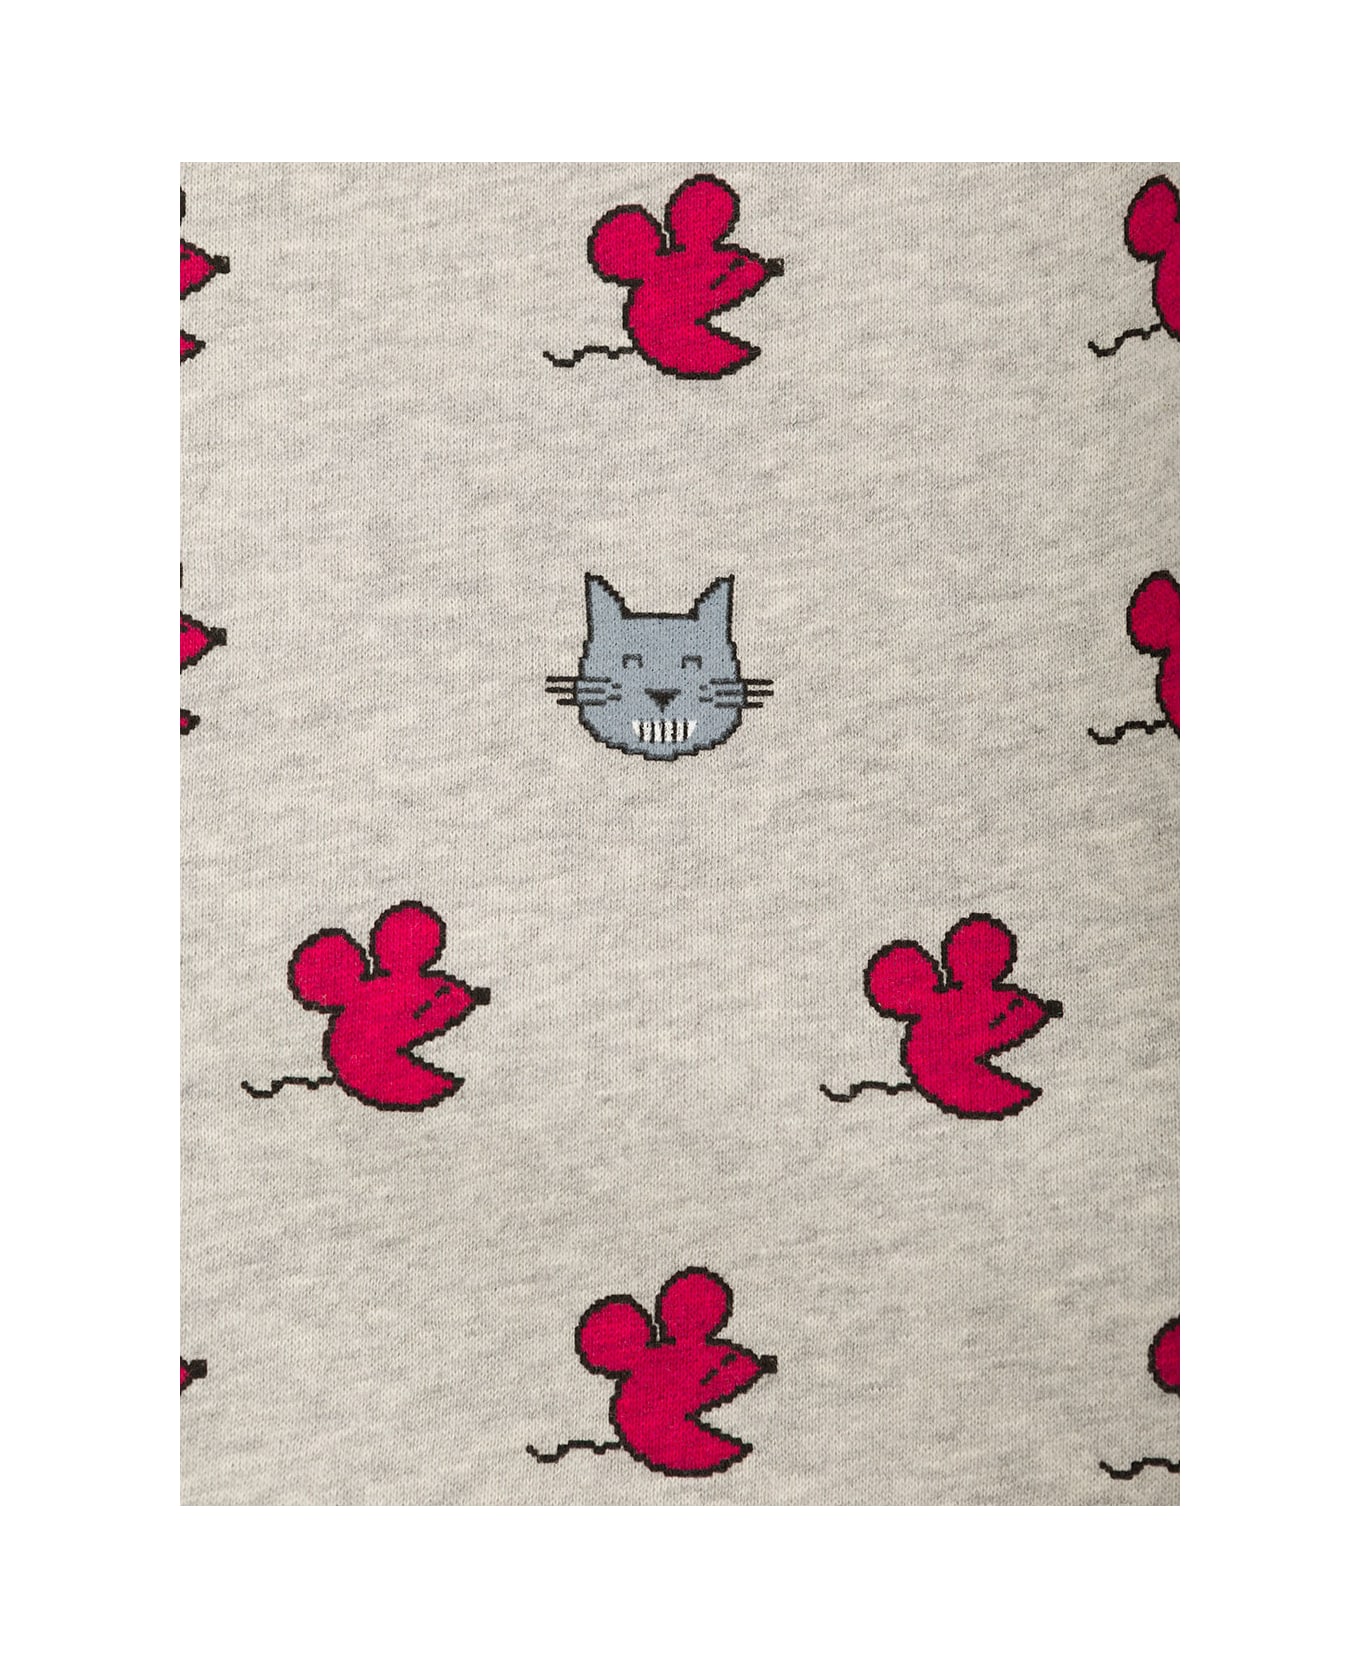 Emile Et Ida Grey Crewneck Sweatshirt With Mouse And Cat Print In Bio Cotton Girl - Multicolor ニットウェア＆スウェットシャツ